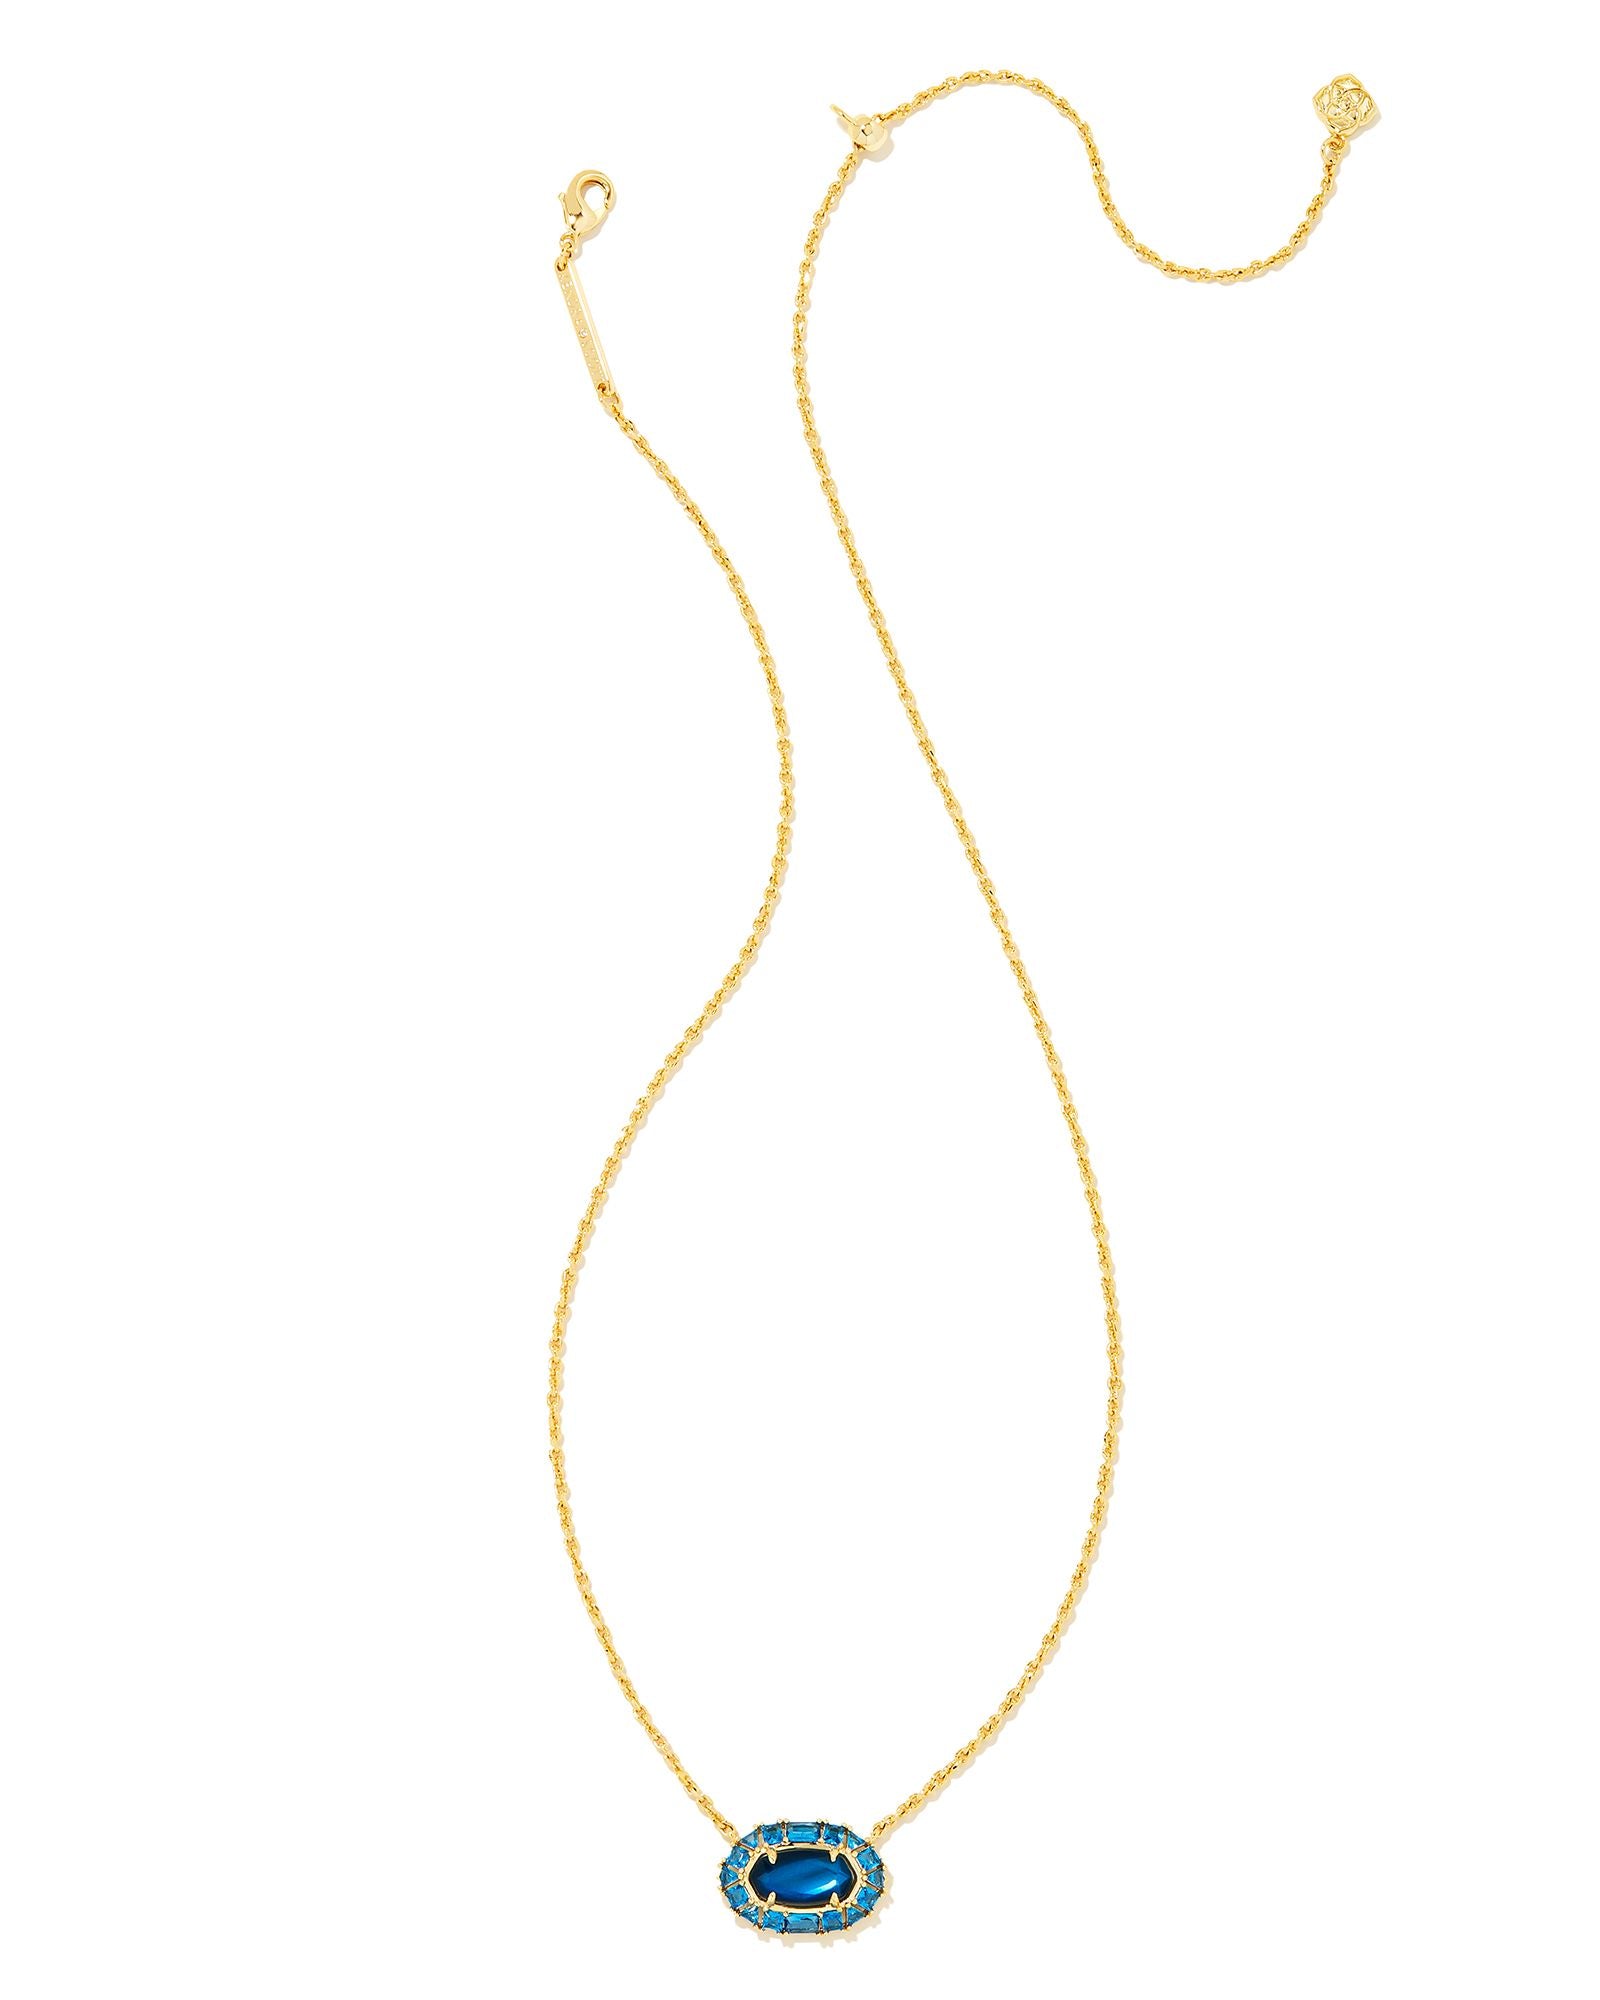 Kendra Scott | Elisa Gold Crystal Frame Short Pendant Necklace in Sea Blue Illusion - Giddy Up Glamour Boutique